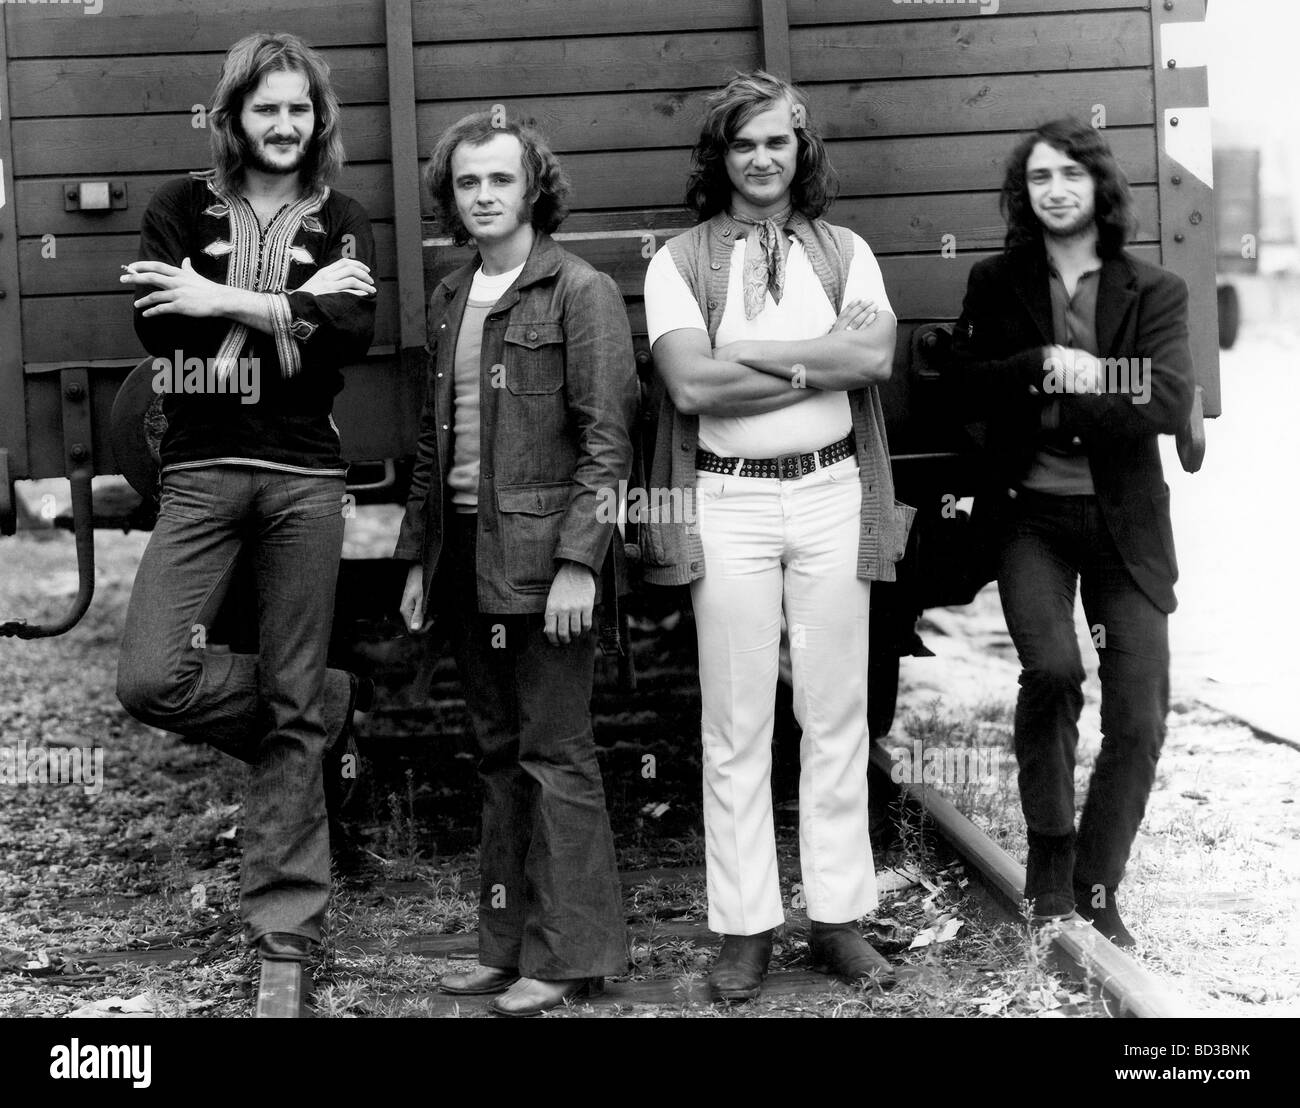 FOCUS Dutch rock group about 1975 Stock Photo - Alamy